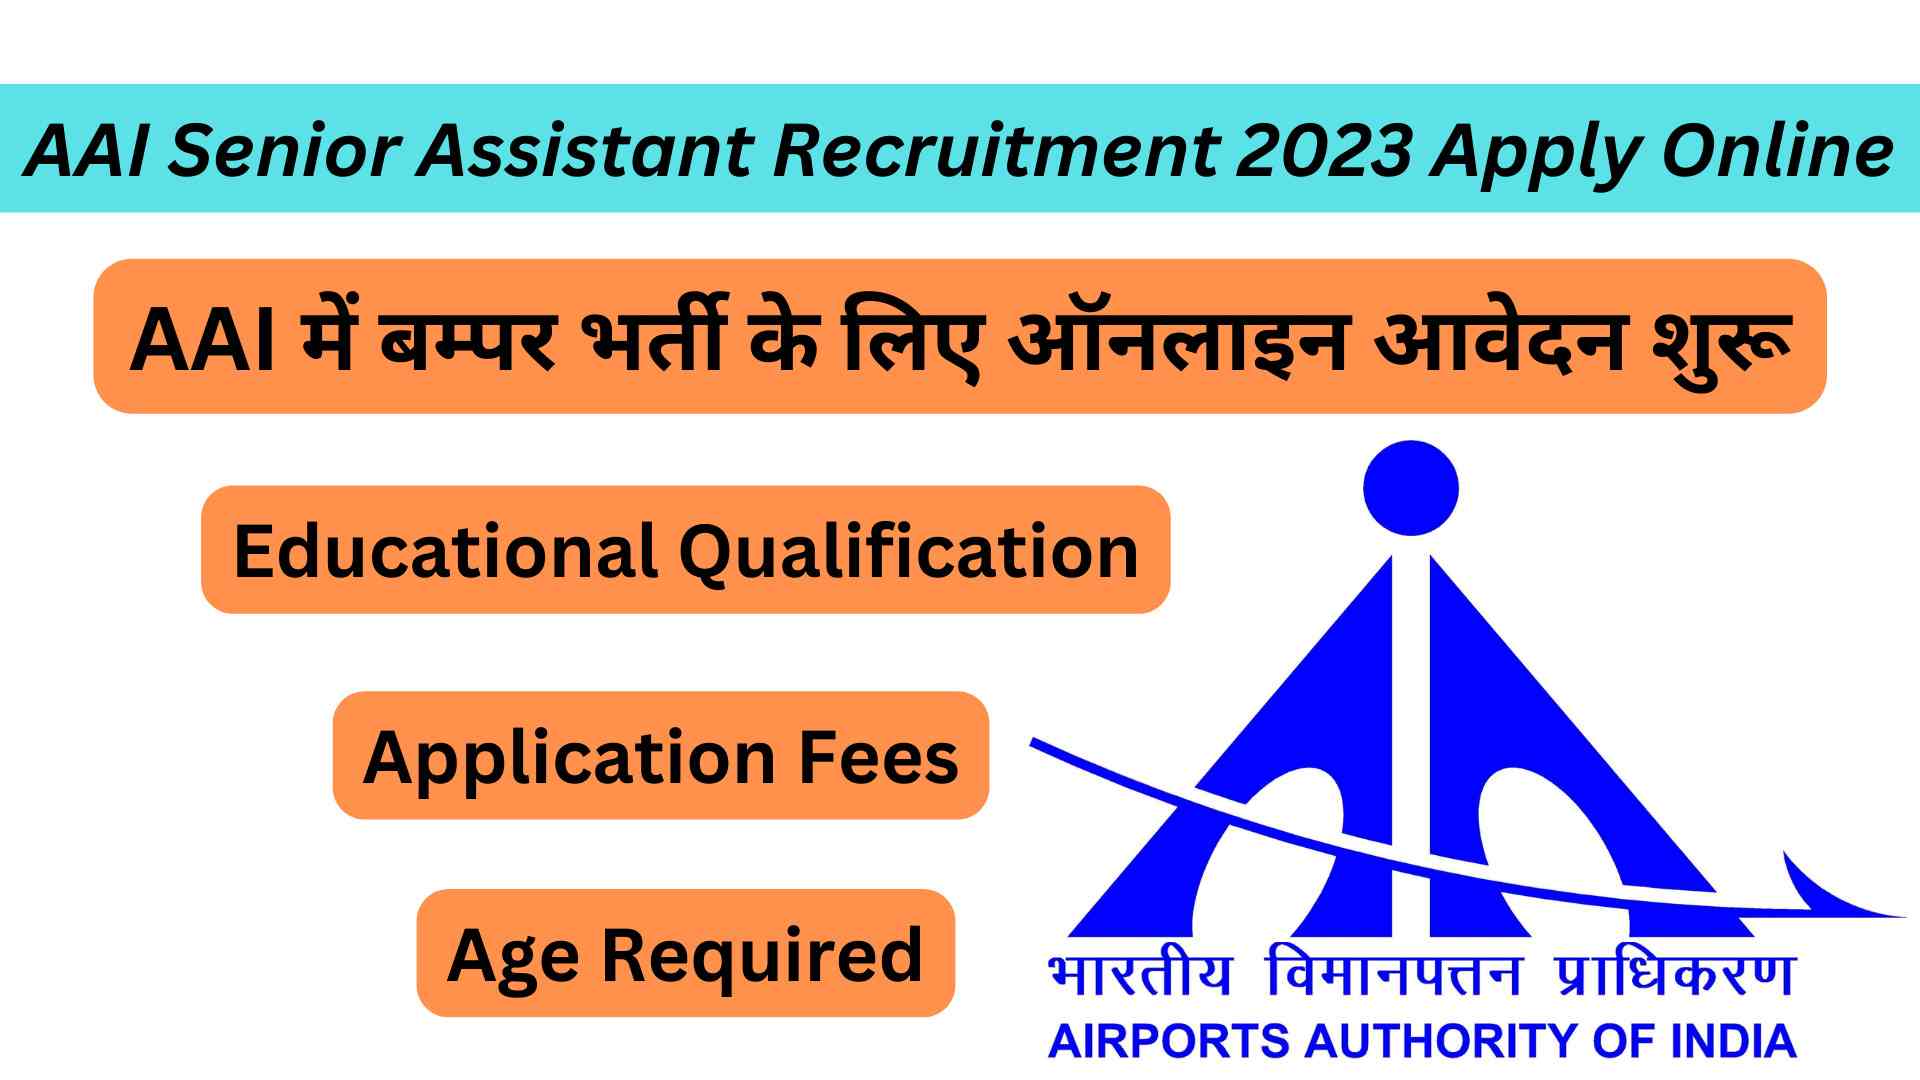 AAI Senior Assistant Recruitment 2023 Online Apply